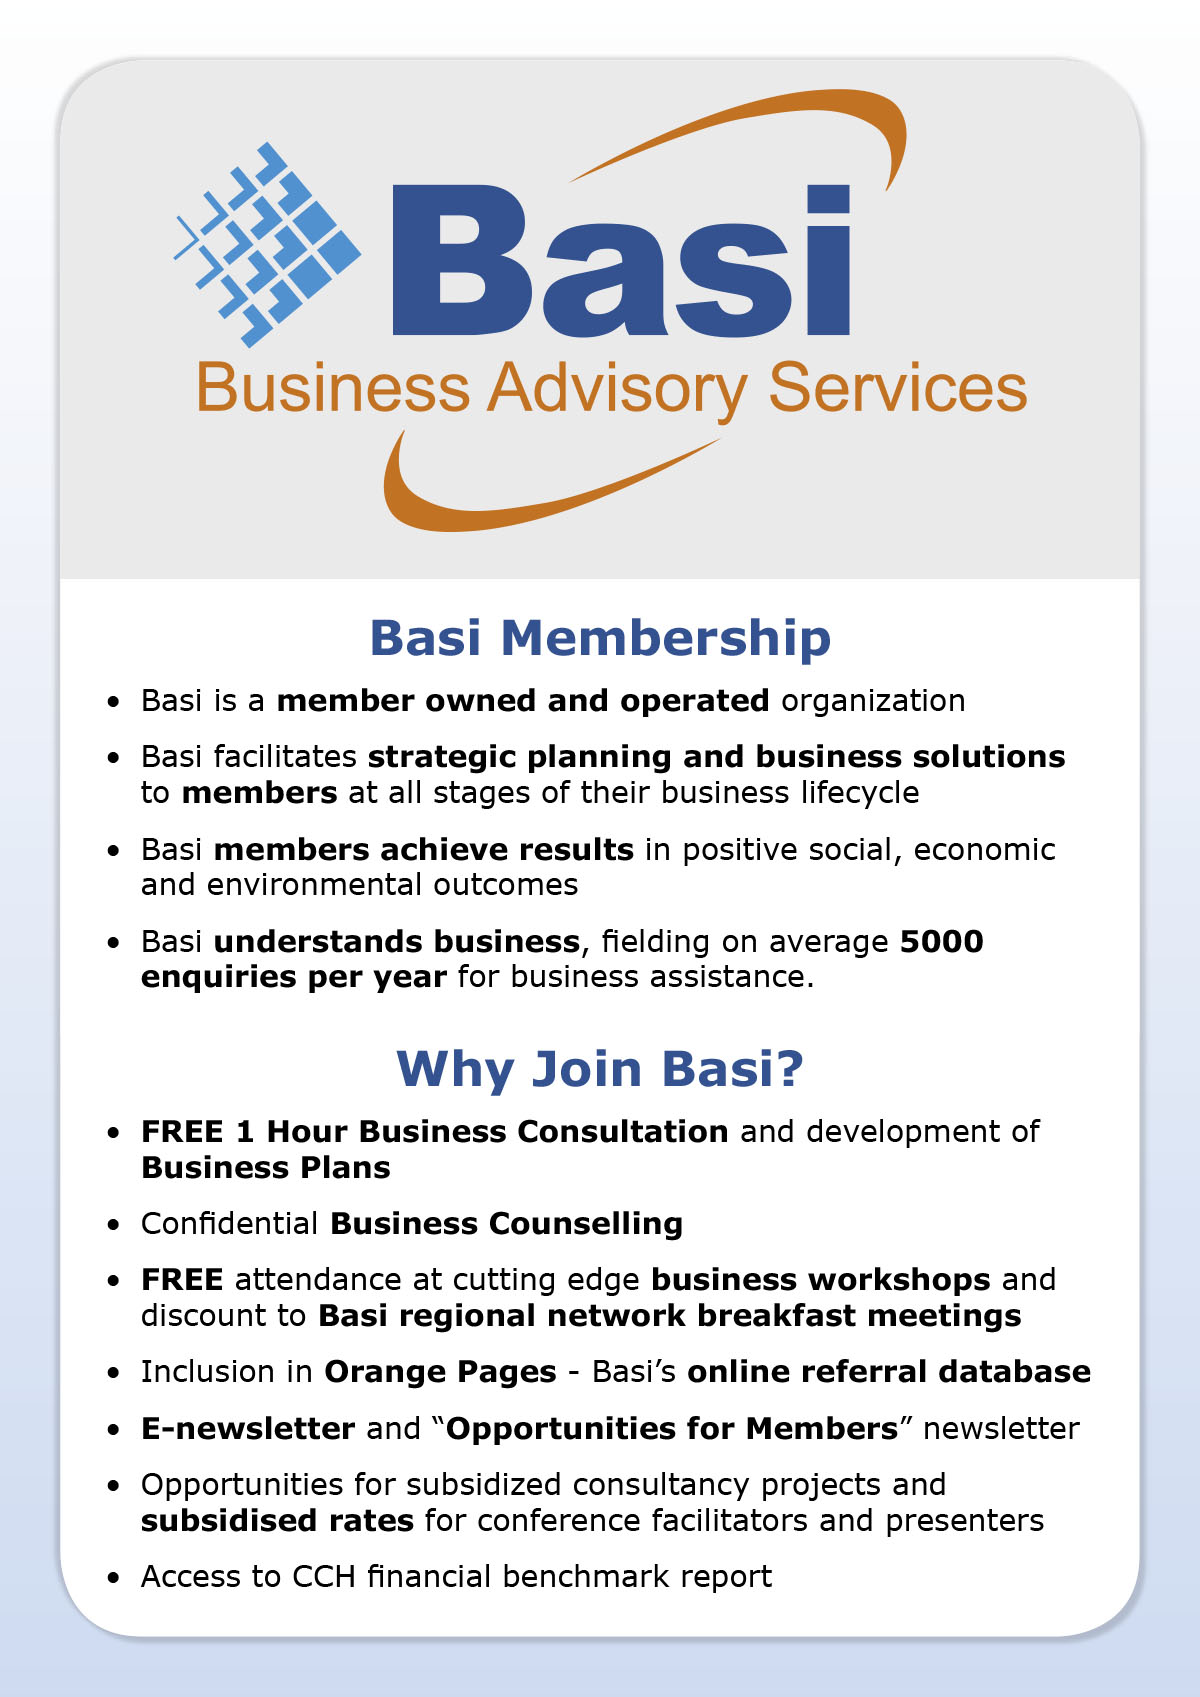 basi-business-services-blacktown-graphic-design-03